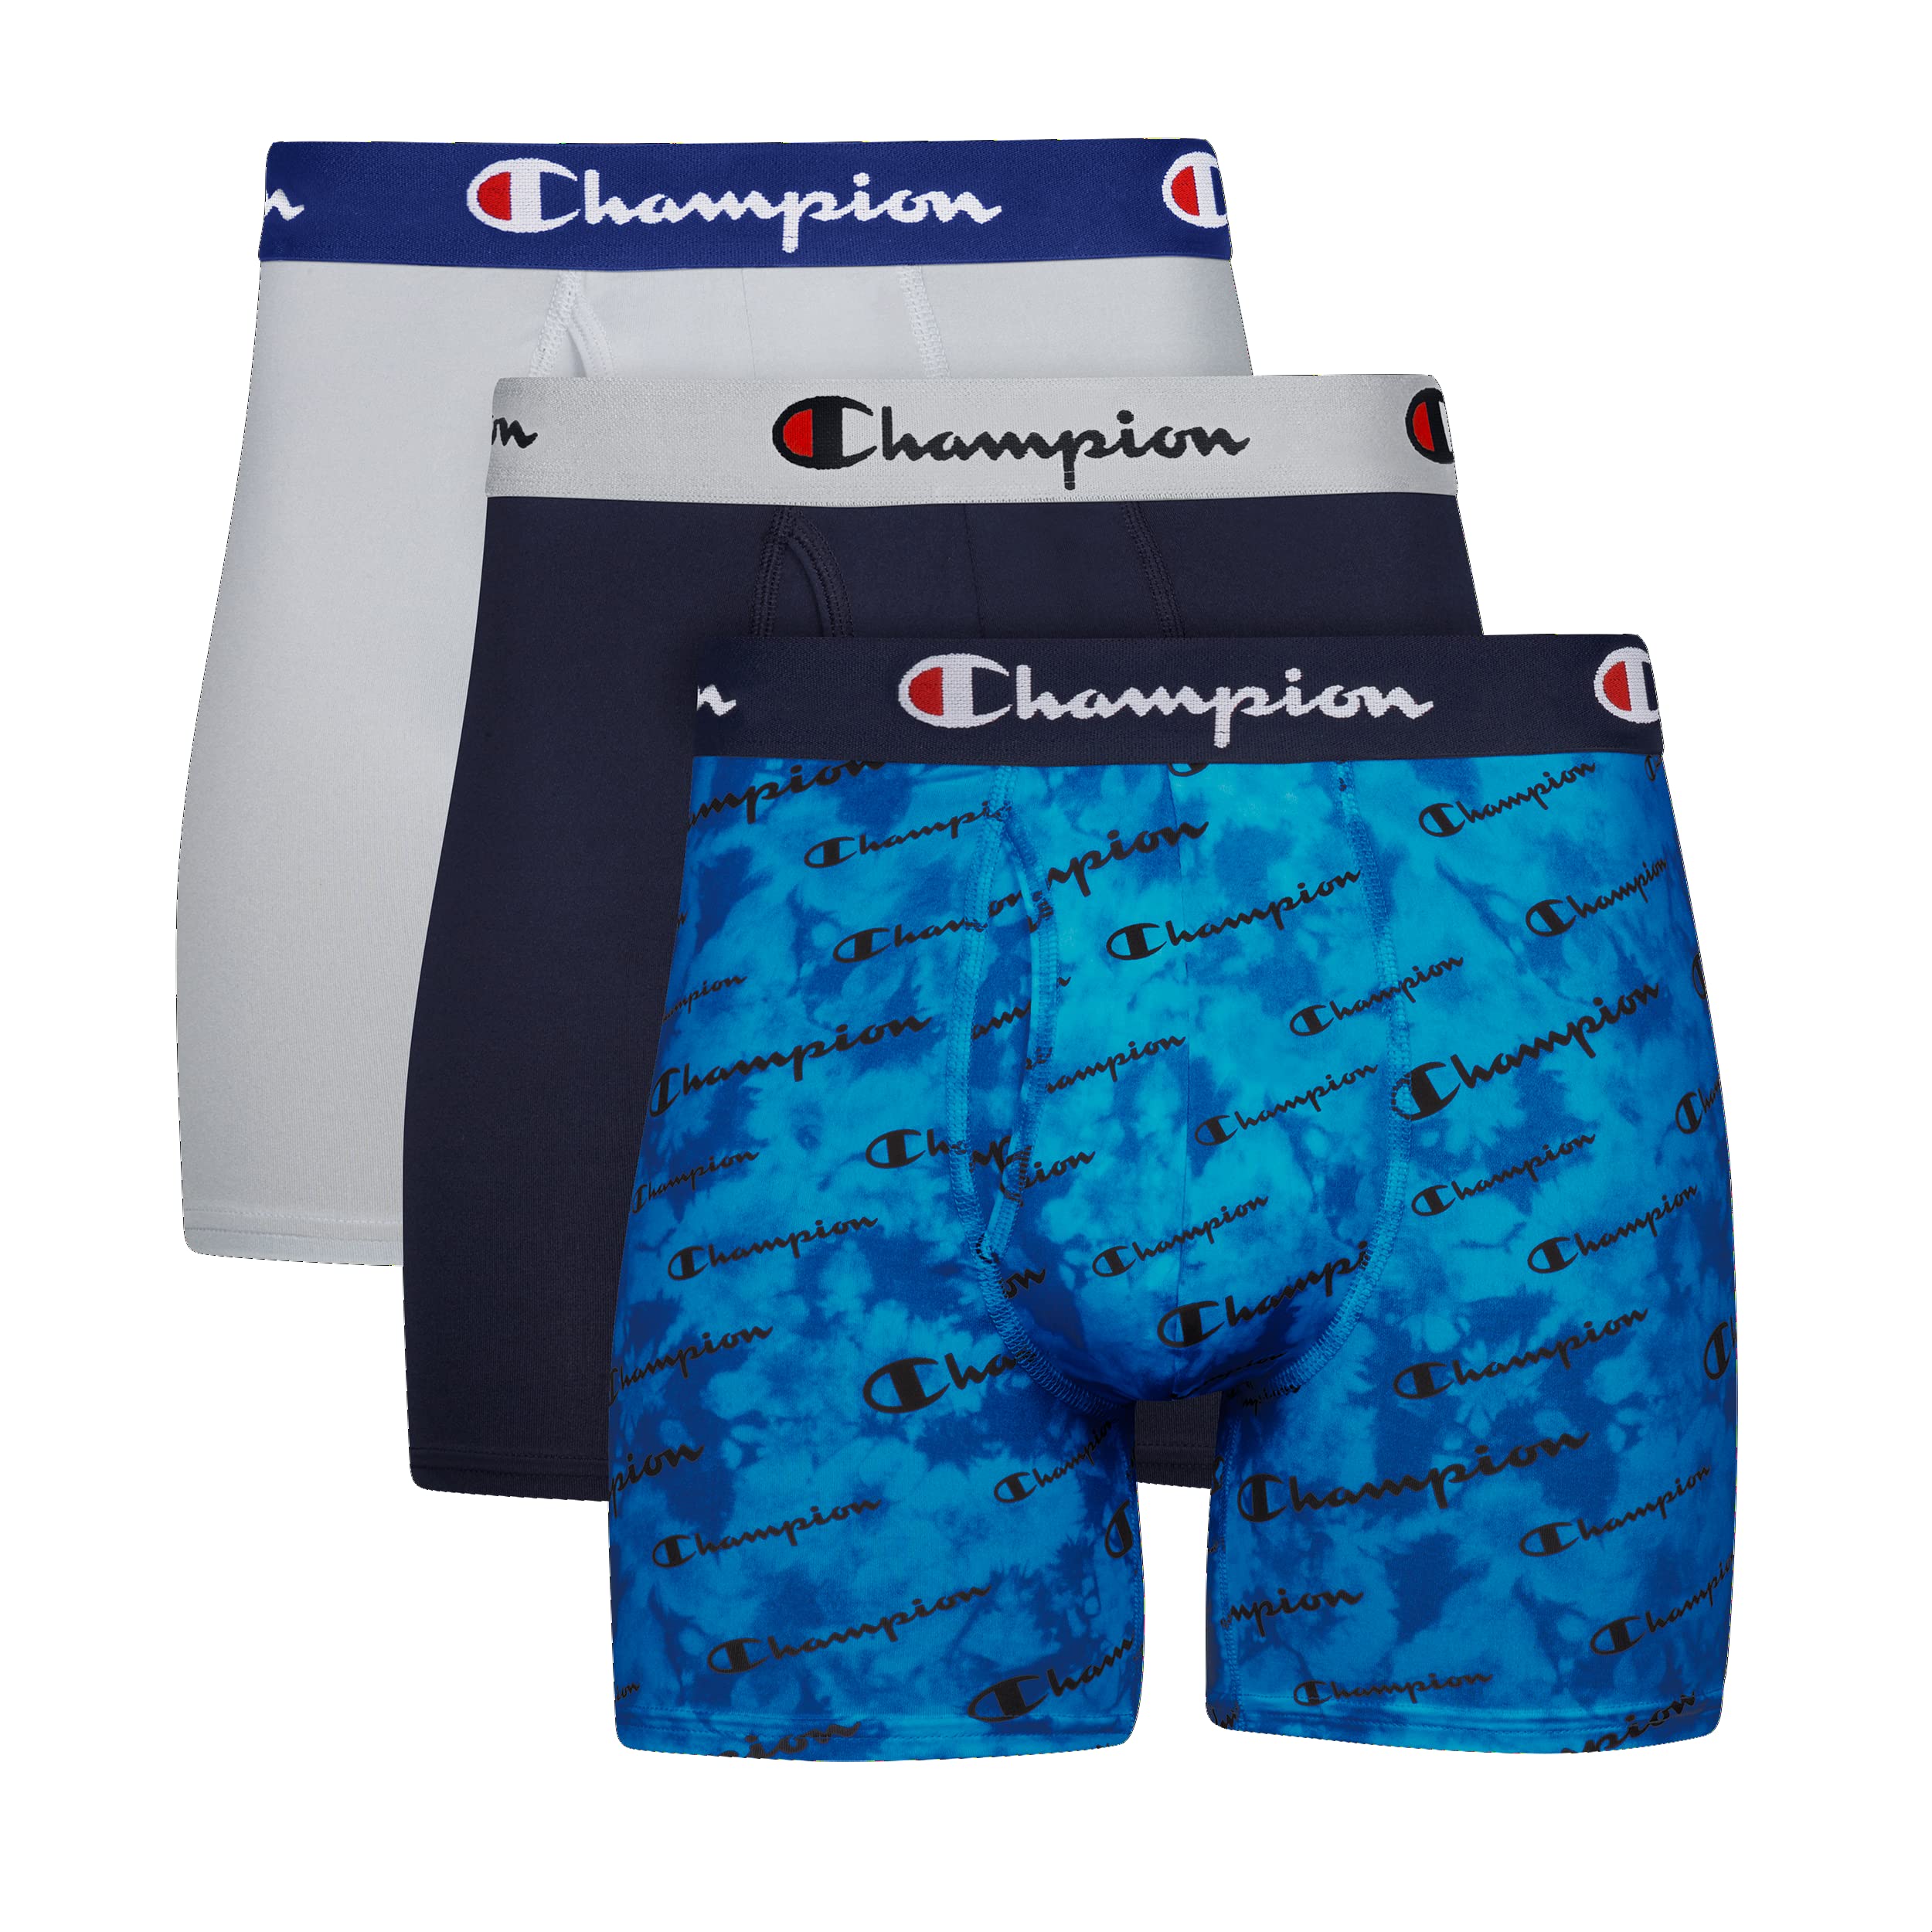 Champion mens Champion Men's Lightweight Stretch 3 Pack Boxer Briefs, Blue Print With Champion Logo/Navy/Silverstone, XX-Large US